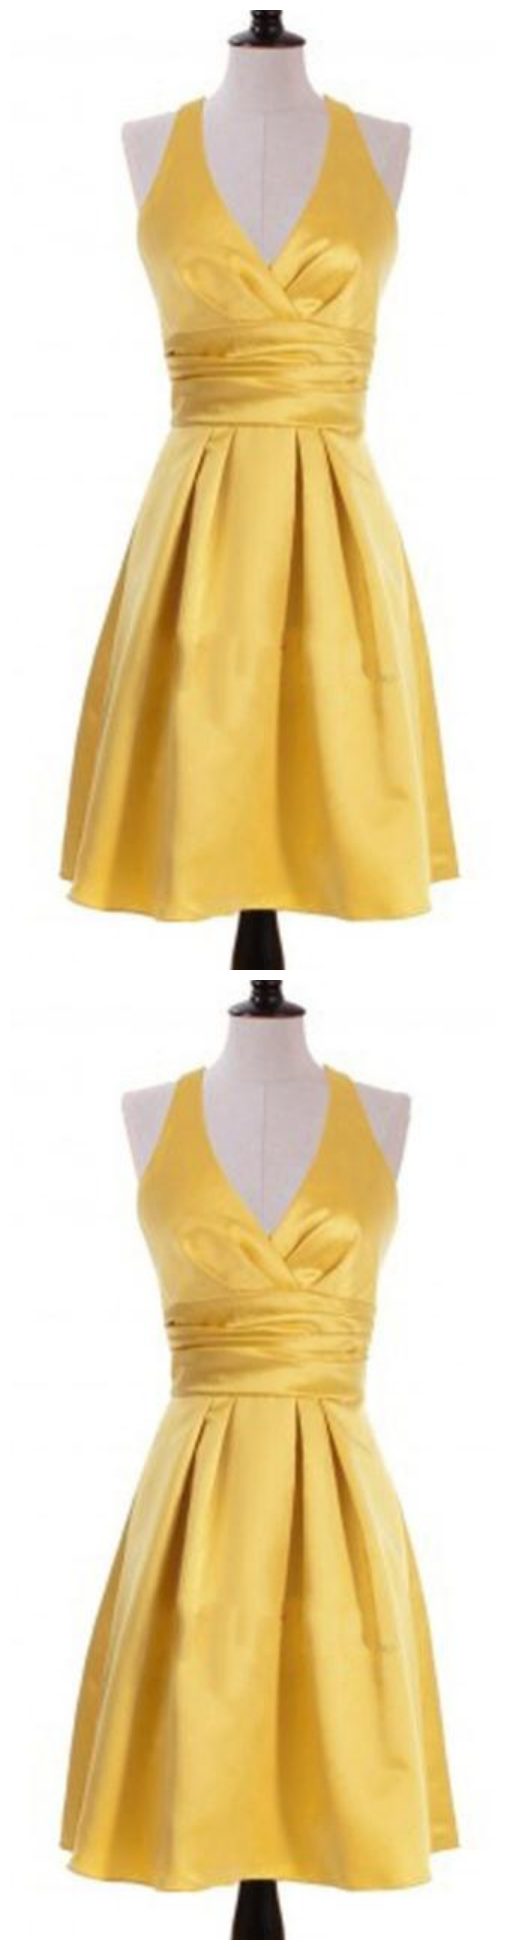 Yellow Halter Cross Back Short Homecoming Dresses A Line Prom Dresses